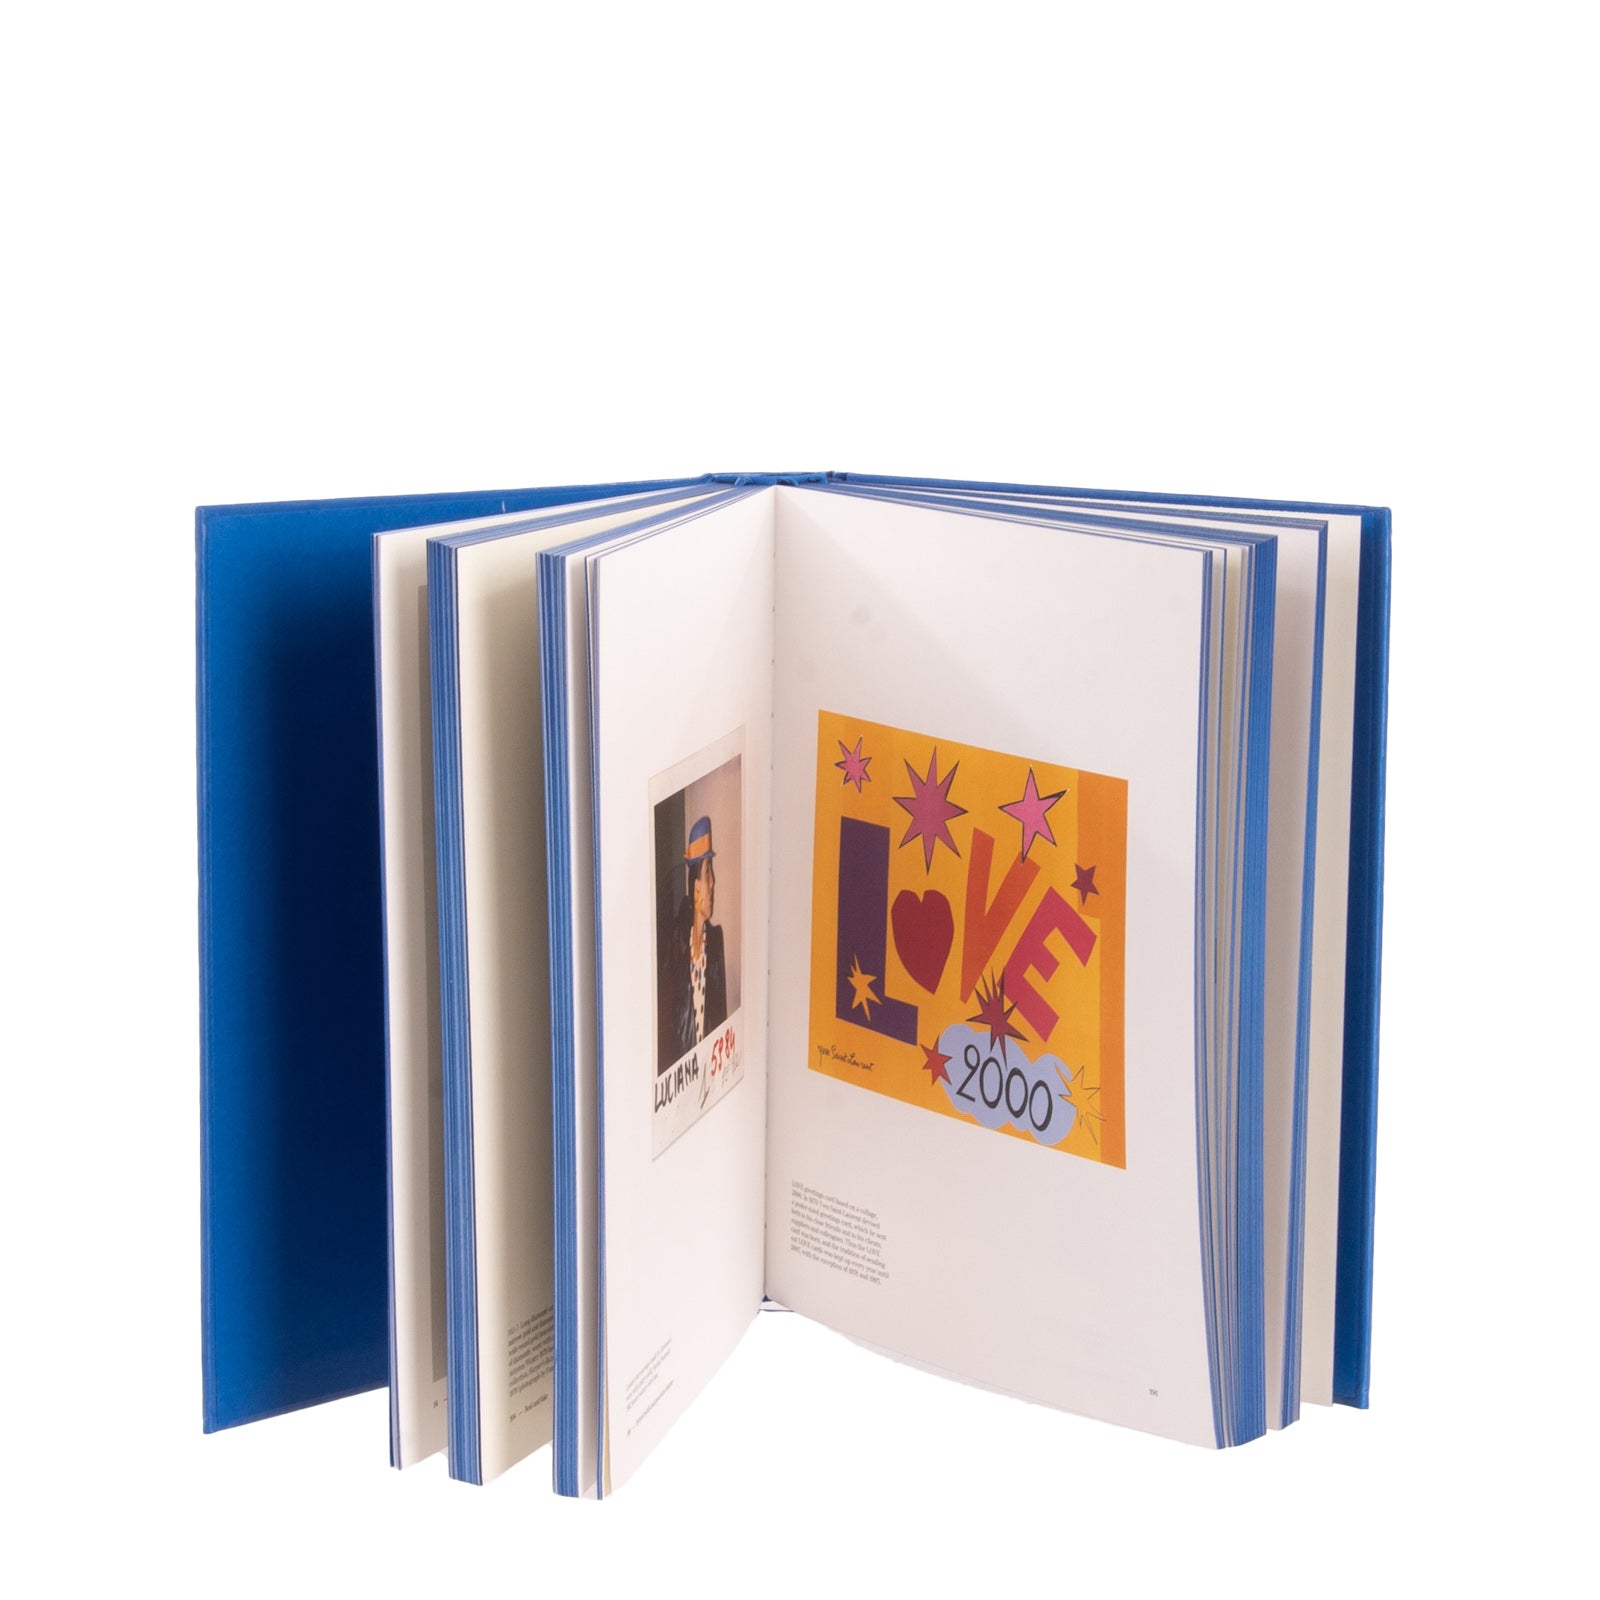 Yves Saint Laurent Accessories Book Mauries BOOK –POPPRI Online Fashion Auctions